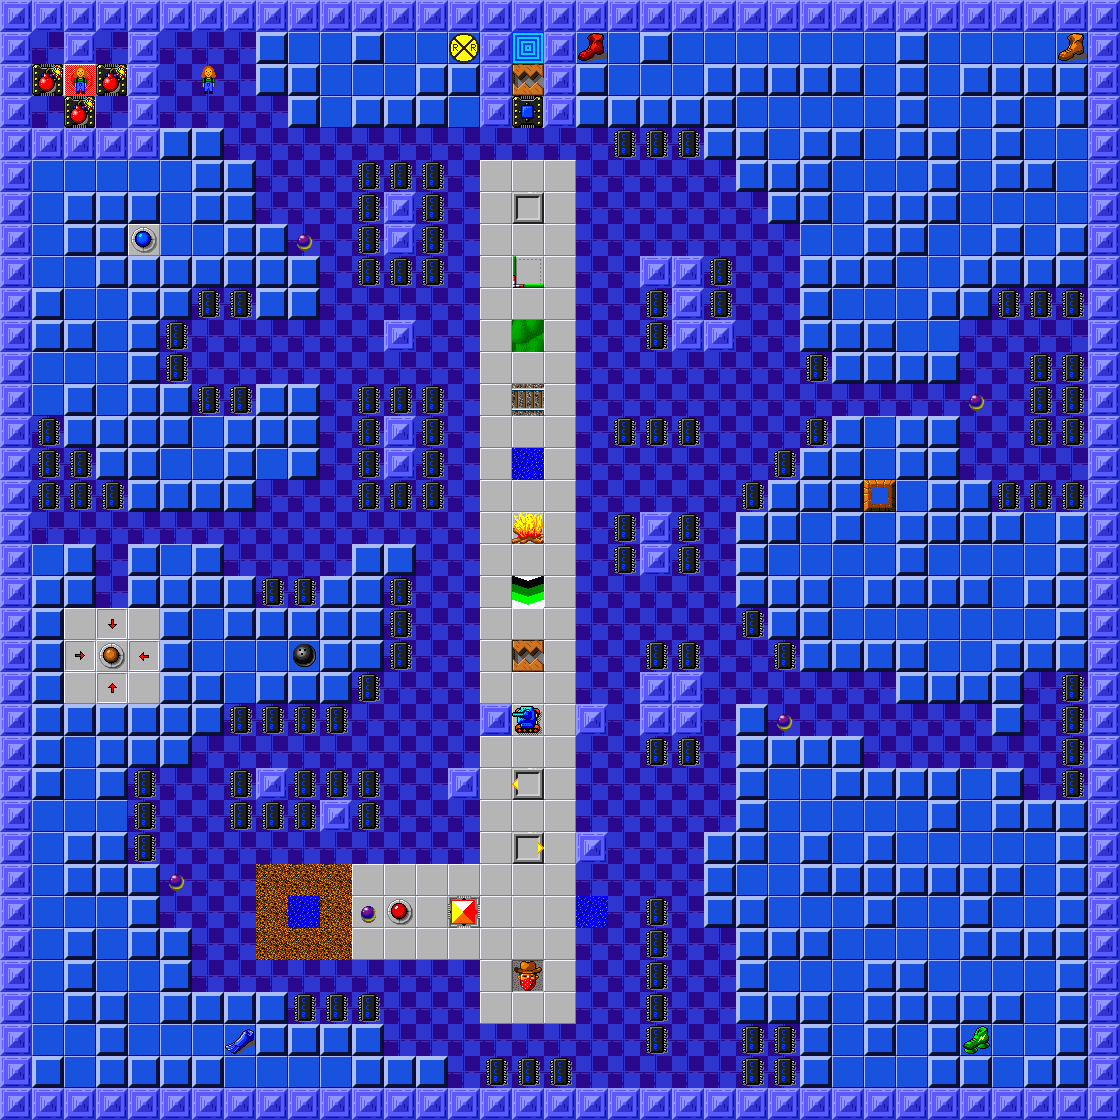 Cc2lp1 full map level 137.png